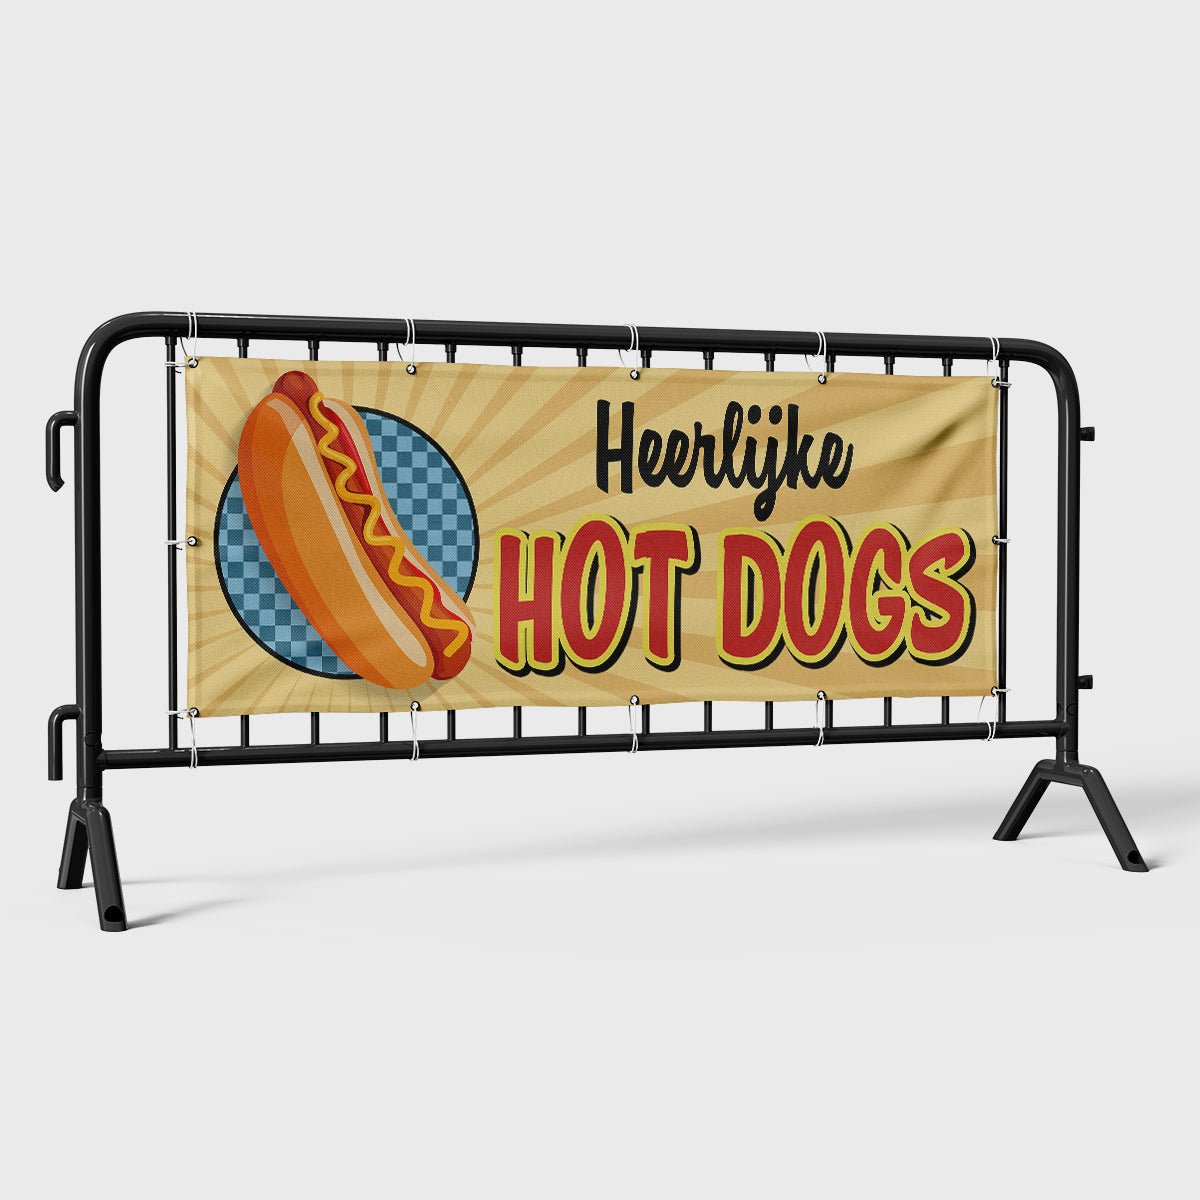 Spandoek Hotdogs